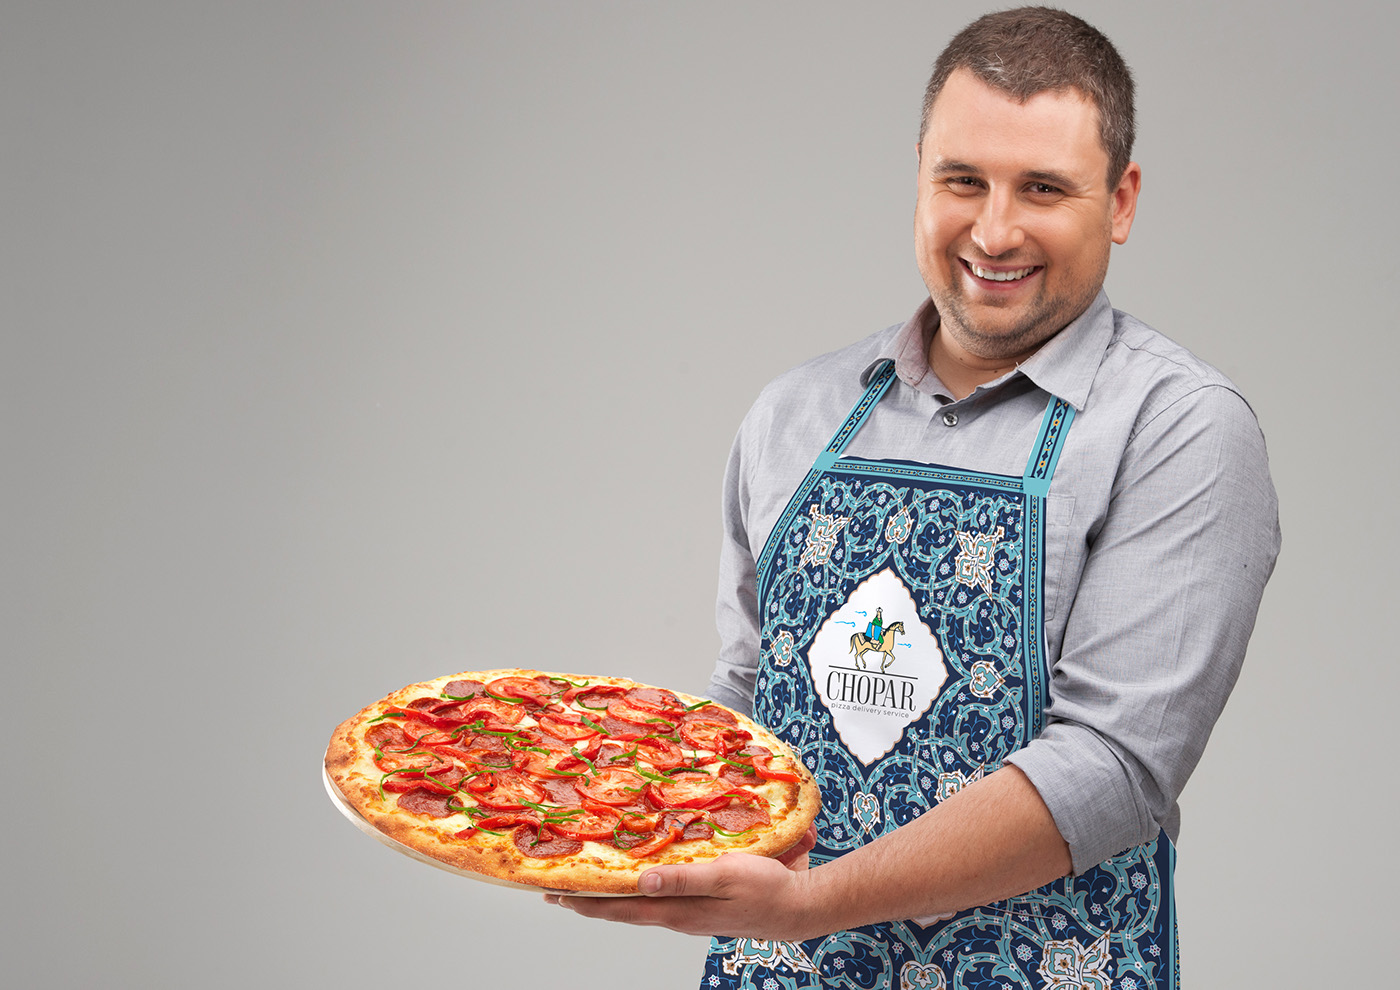 Pizza Chopar delivery tashkent uzbekistan pizzeria Food  eat yum asia free hourse пицца доставка 